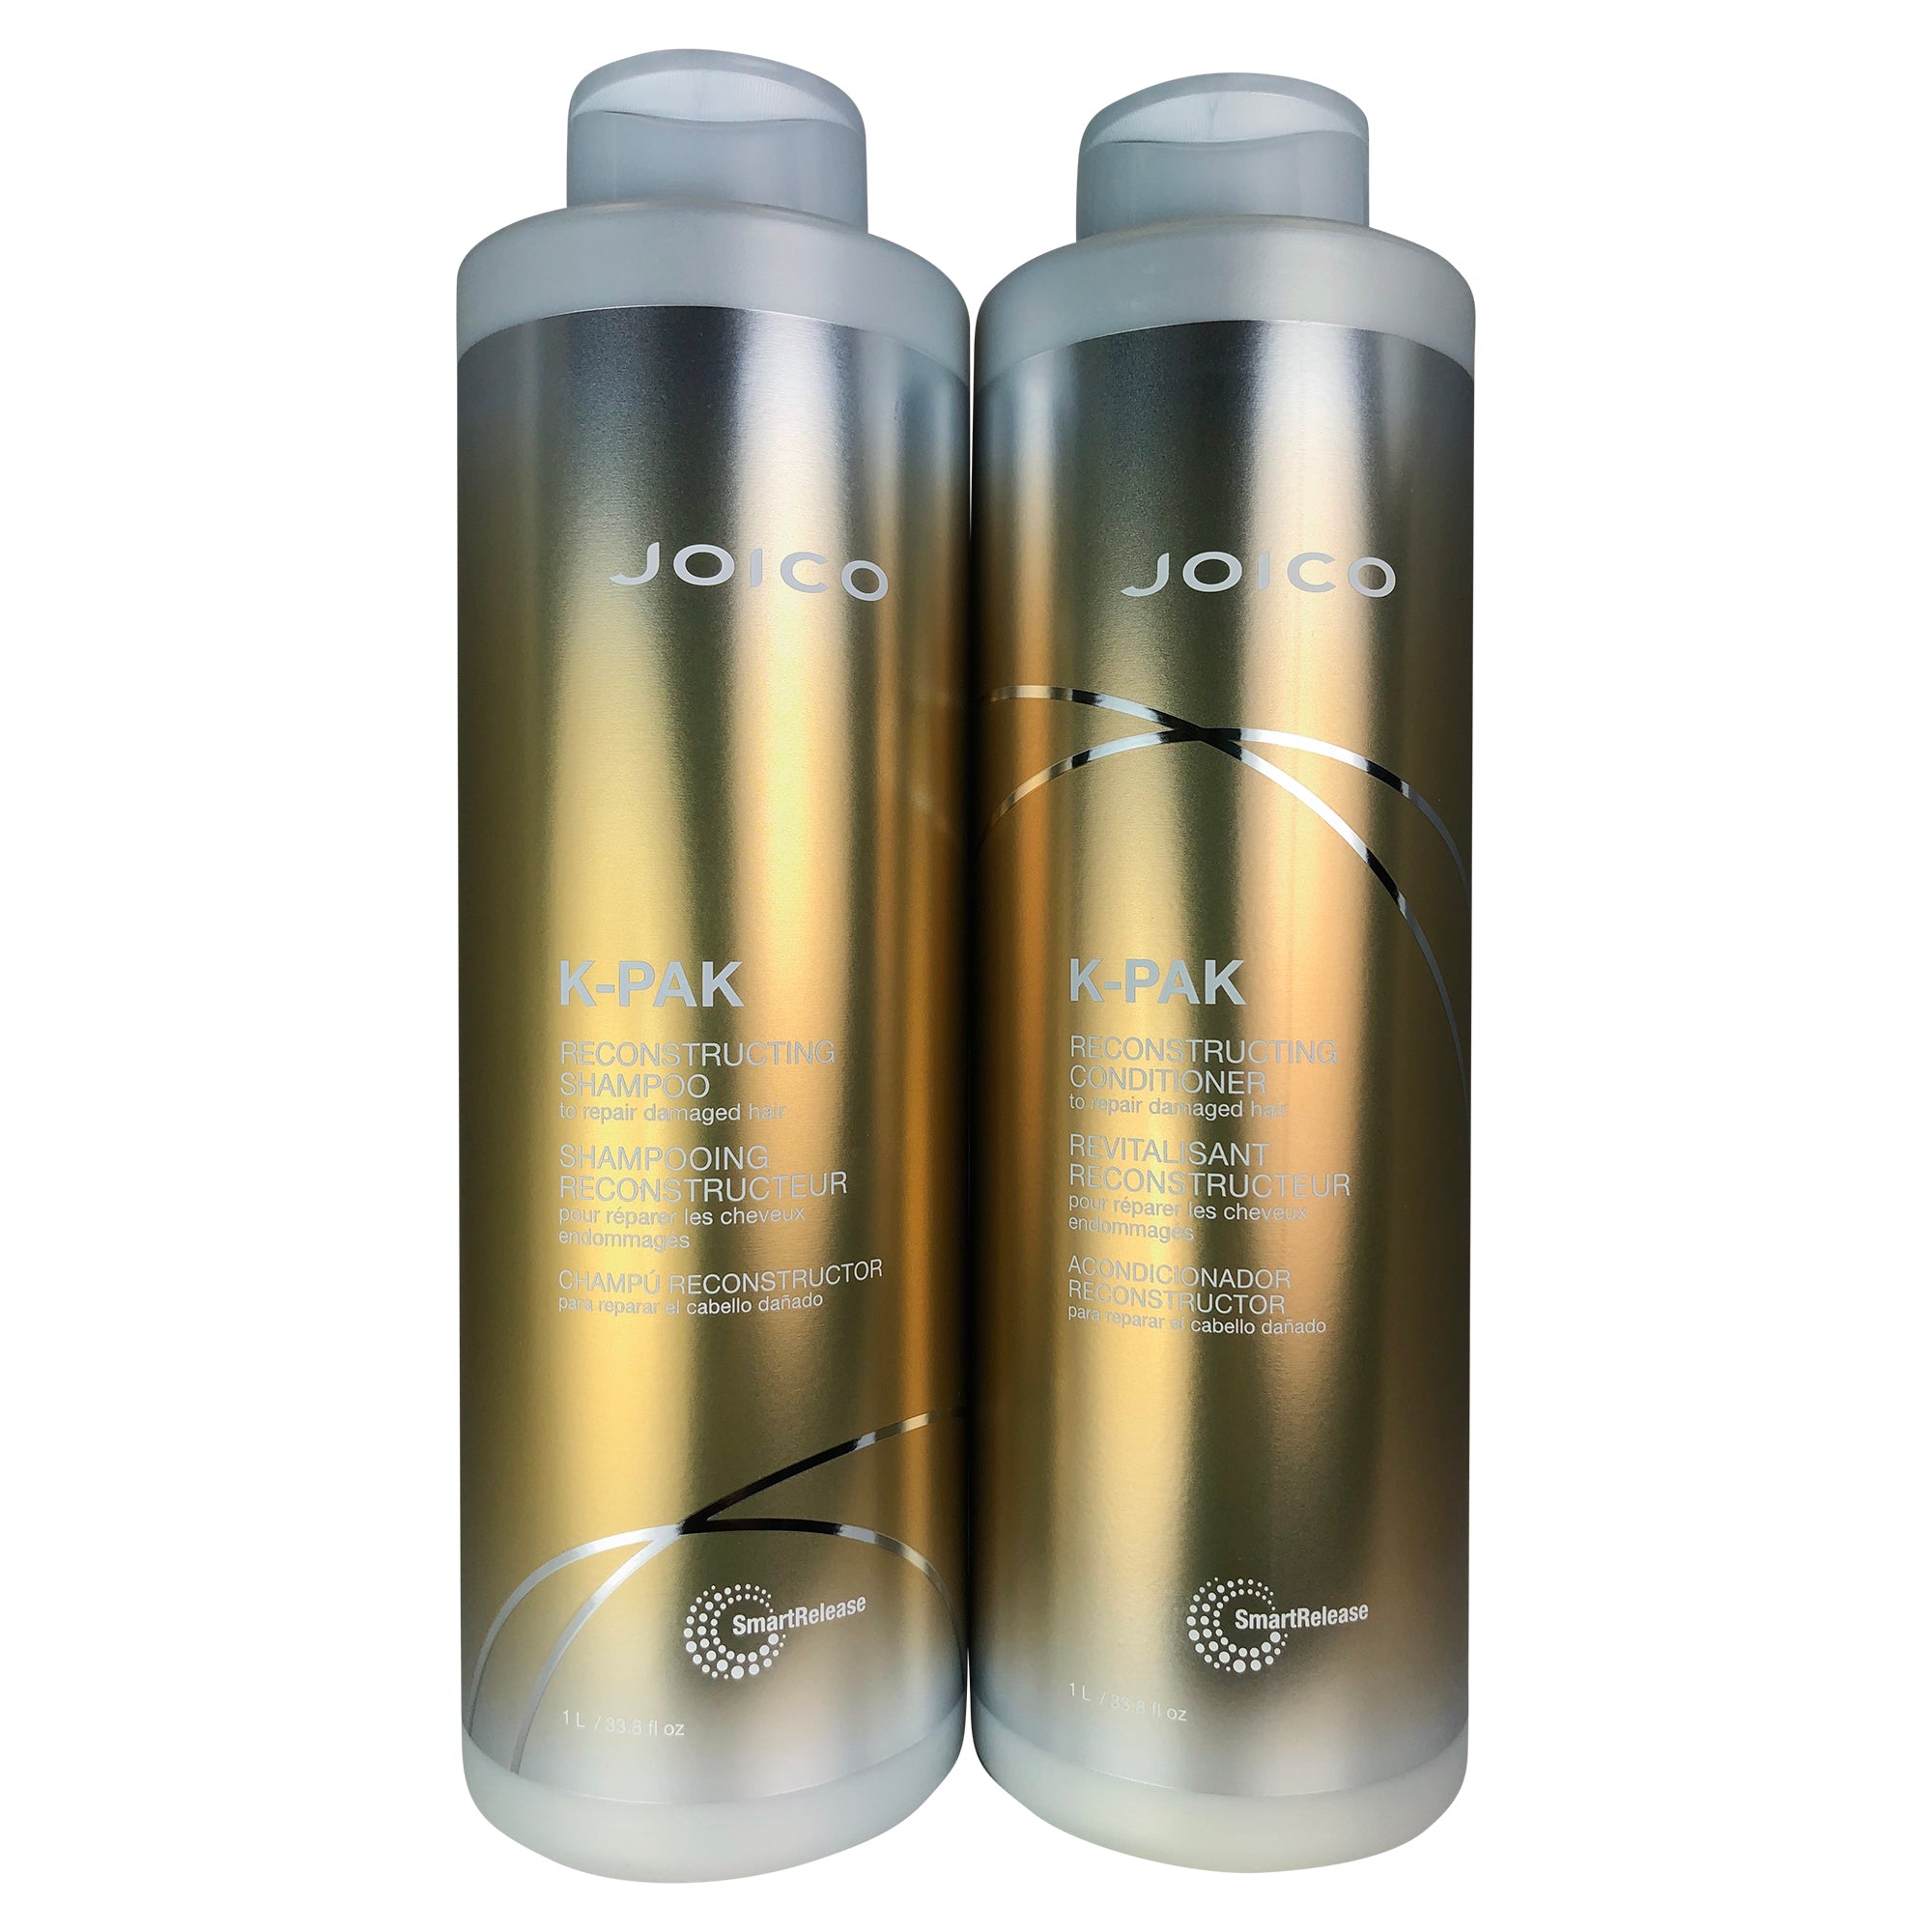 Joico K-PAK Damaged Hair's Hero Reconstructing Shampoo & Conditioner Duo 33.8oz Each